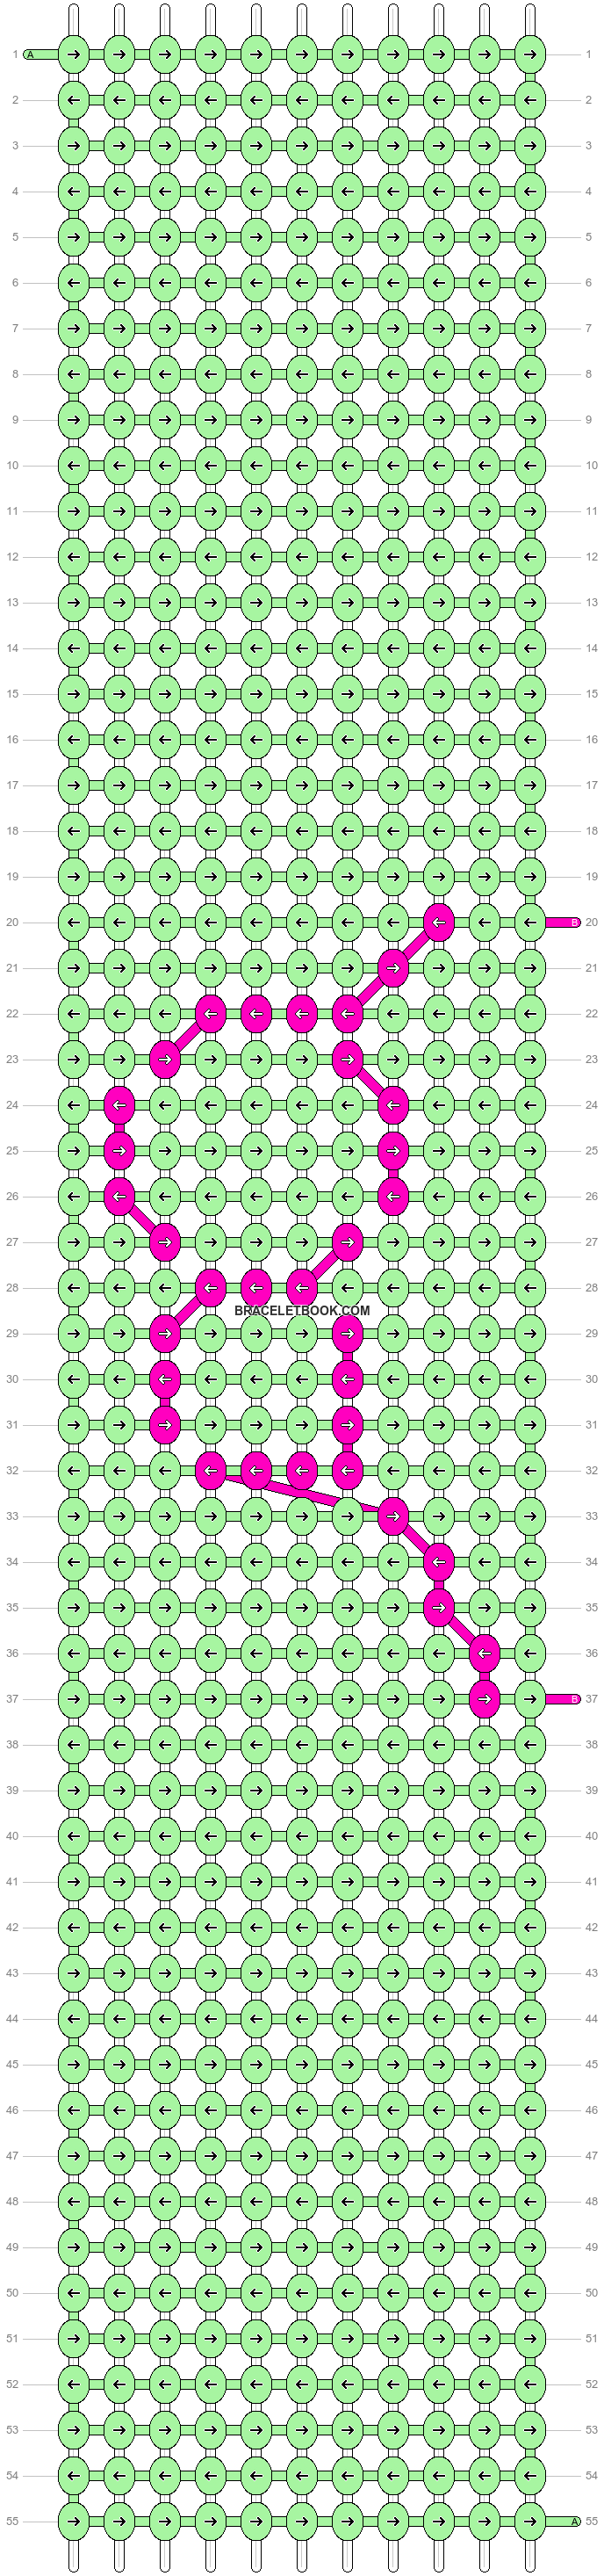 Alpha pattern #46134 variation #84745 pattern